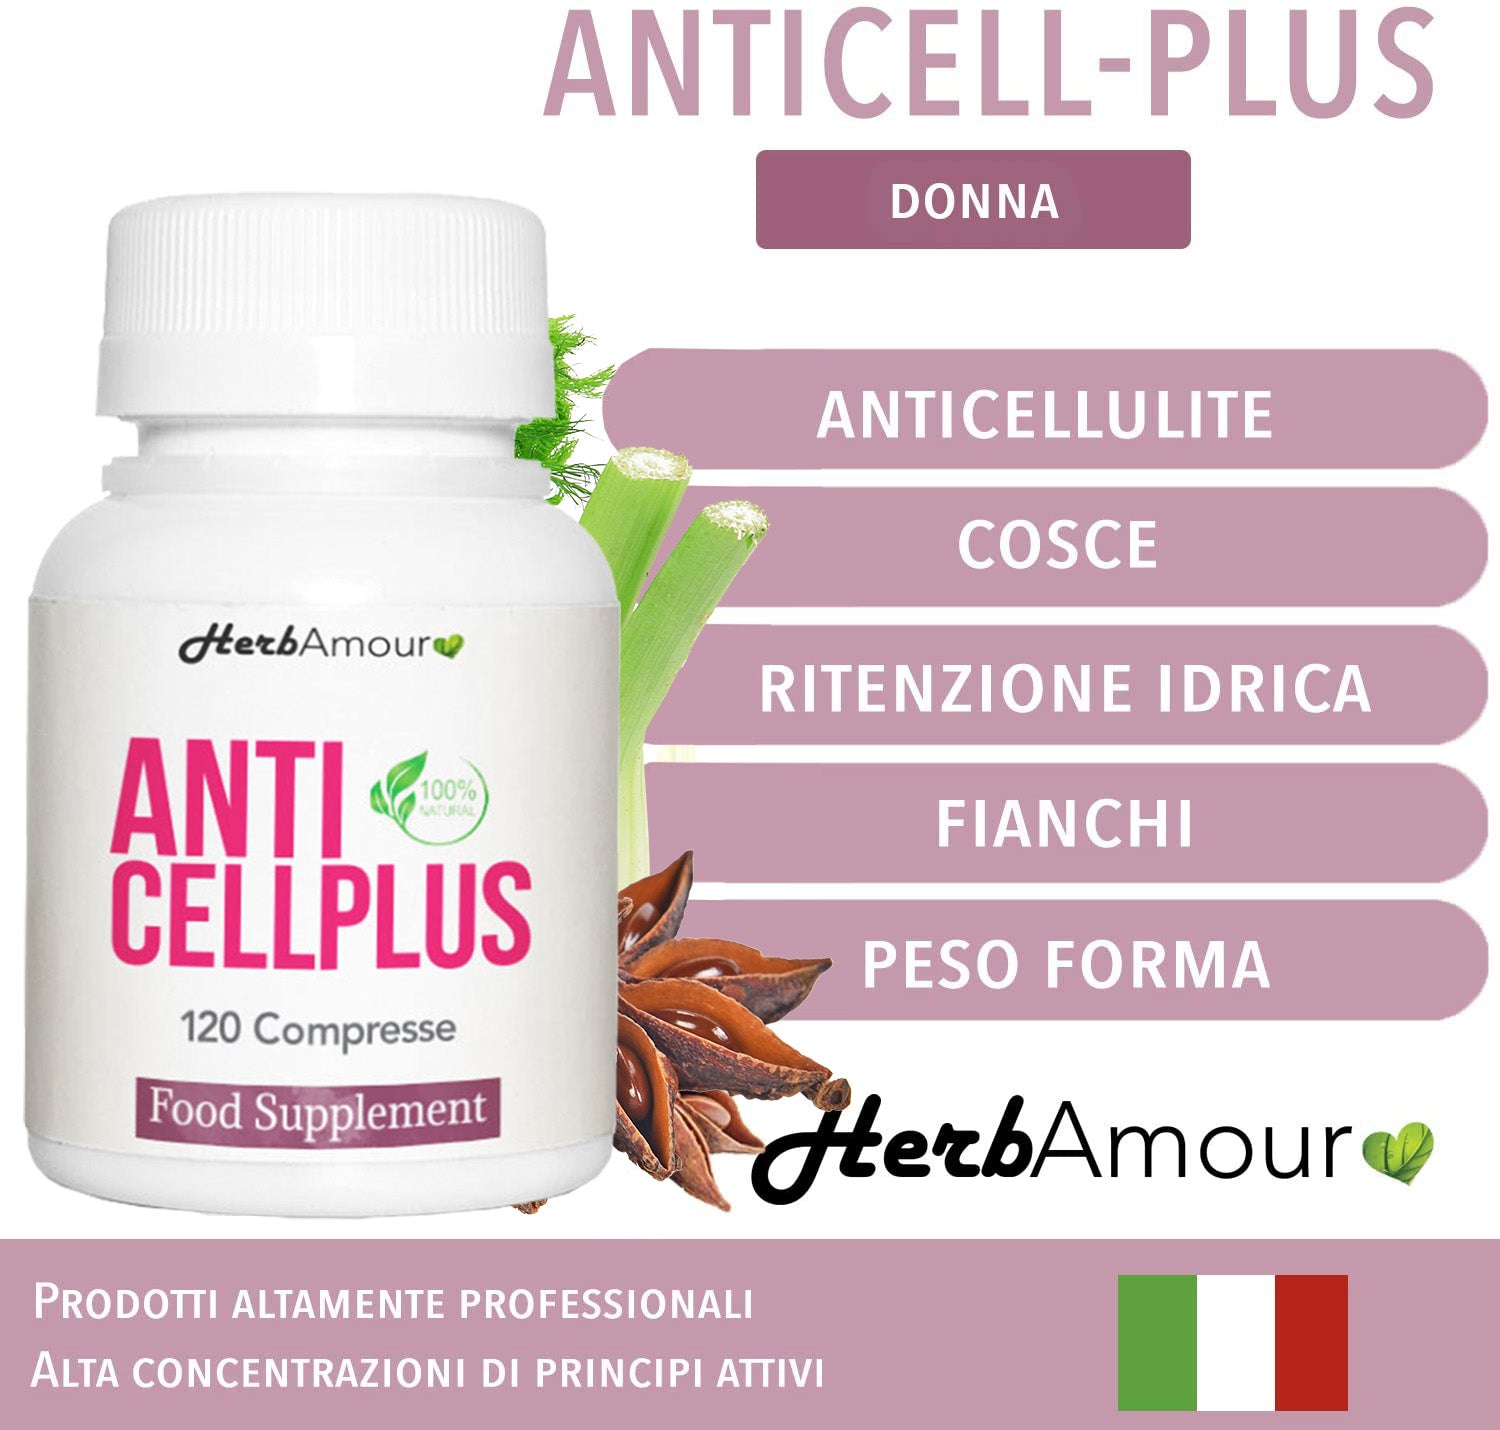 HerbAmour® AntiCellPlus